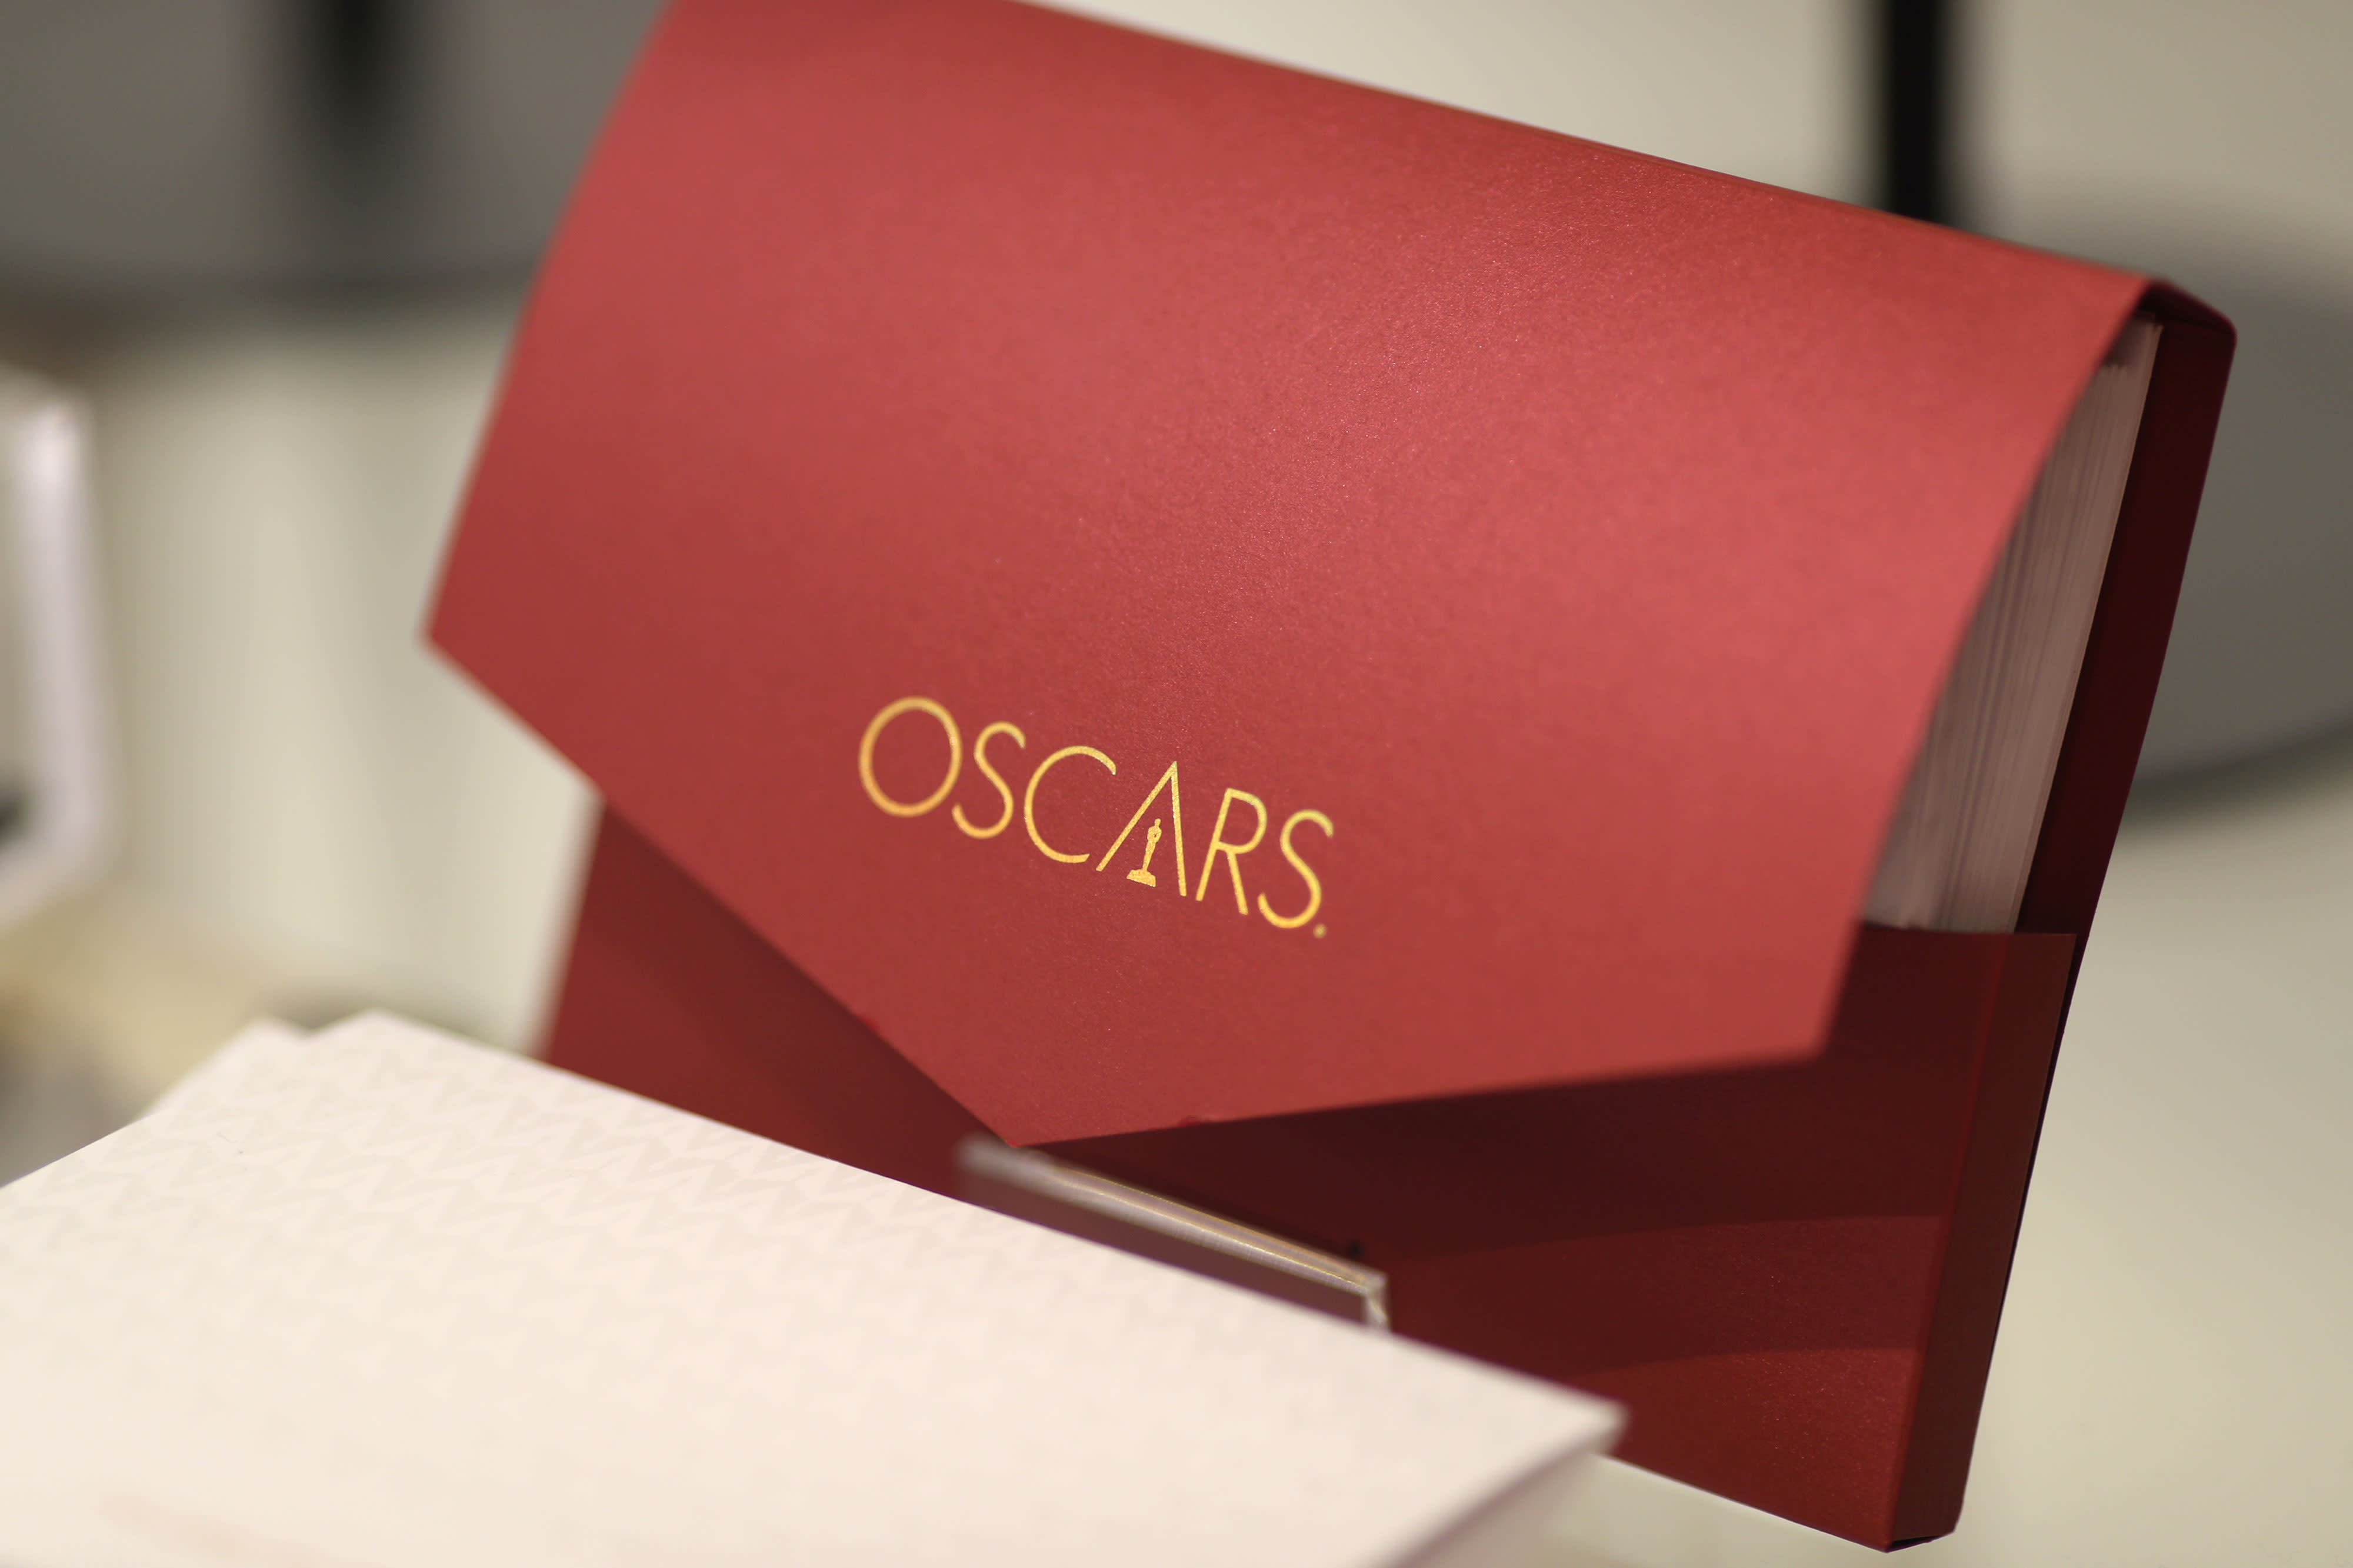 Regina King - Oscars 2019: Oscar Winners 2019 - Oscars 2019 Photos  #academyaward Regina King - Oscars 201…